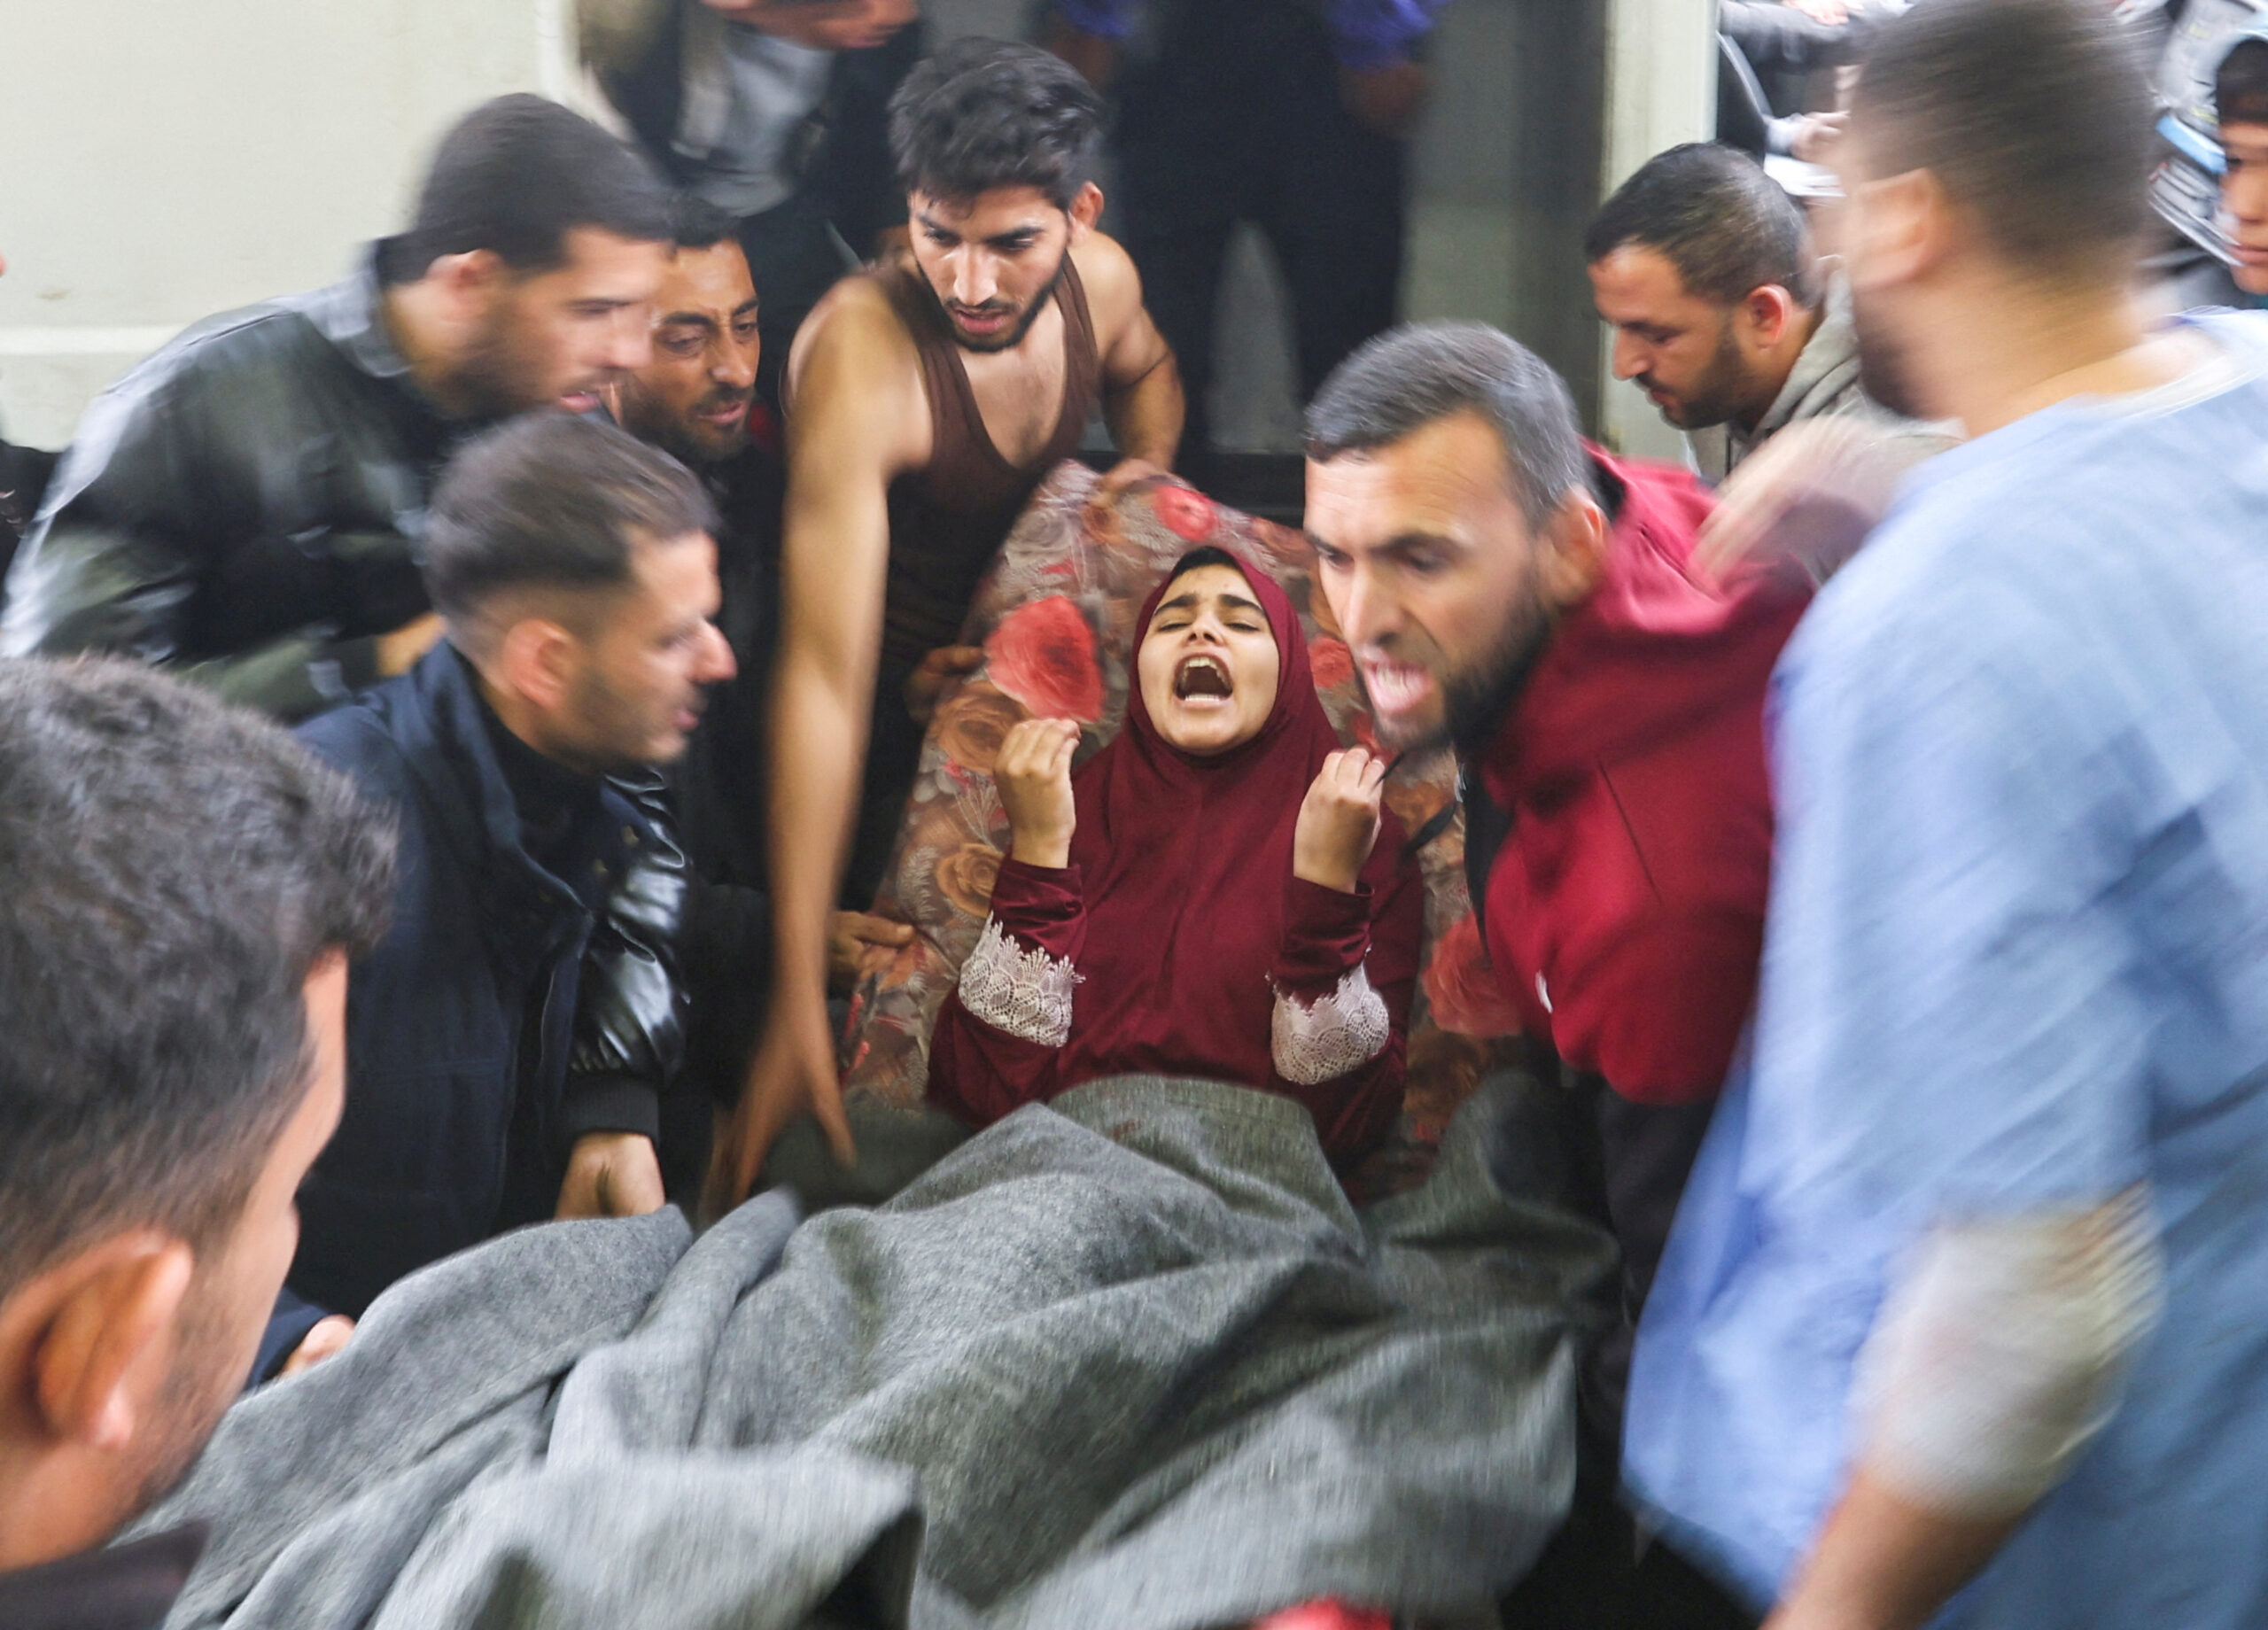 Sos dall'ospedale Kamal Adwan: "Circondati dagli israeliani, si rischia il massacro"